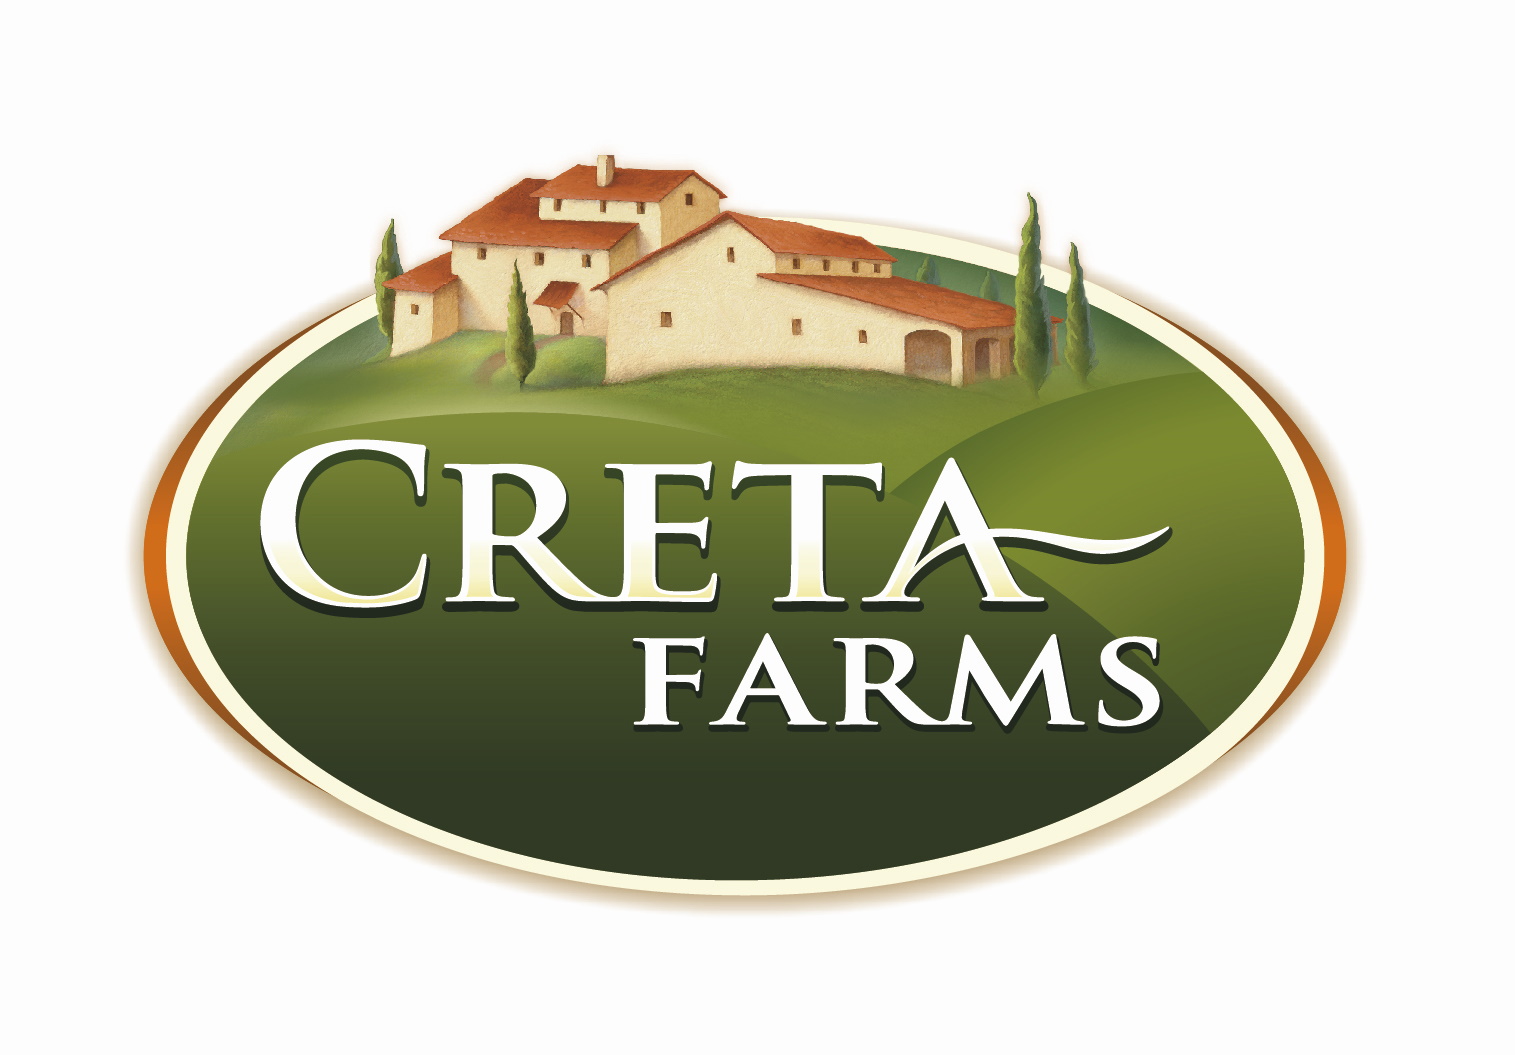 Creta Farms: Υπό νέα διοίκηση επιστρέφει στα υψηλά επίπεδα του 2018 – Στα 98,6 εκατ. ευρώ οι πωλήσεις